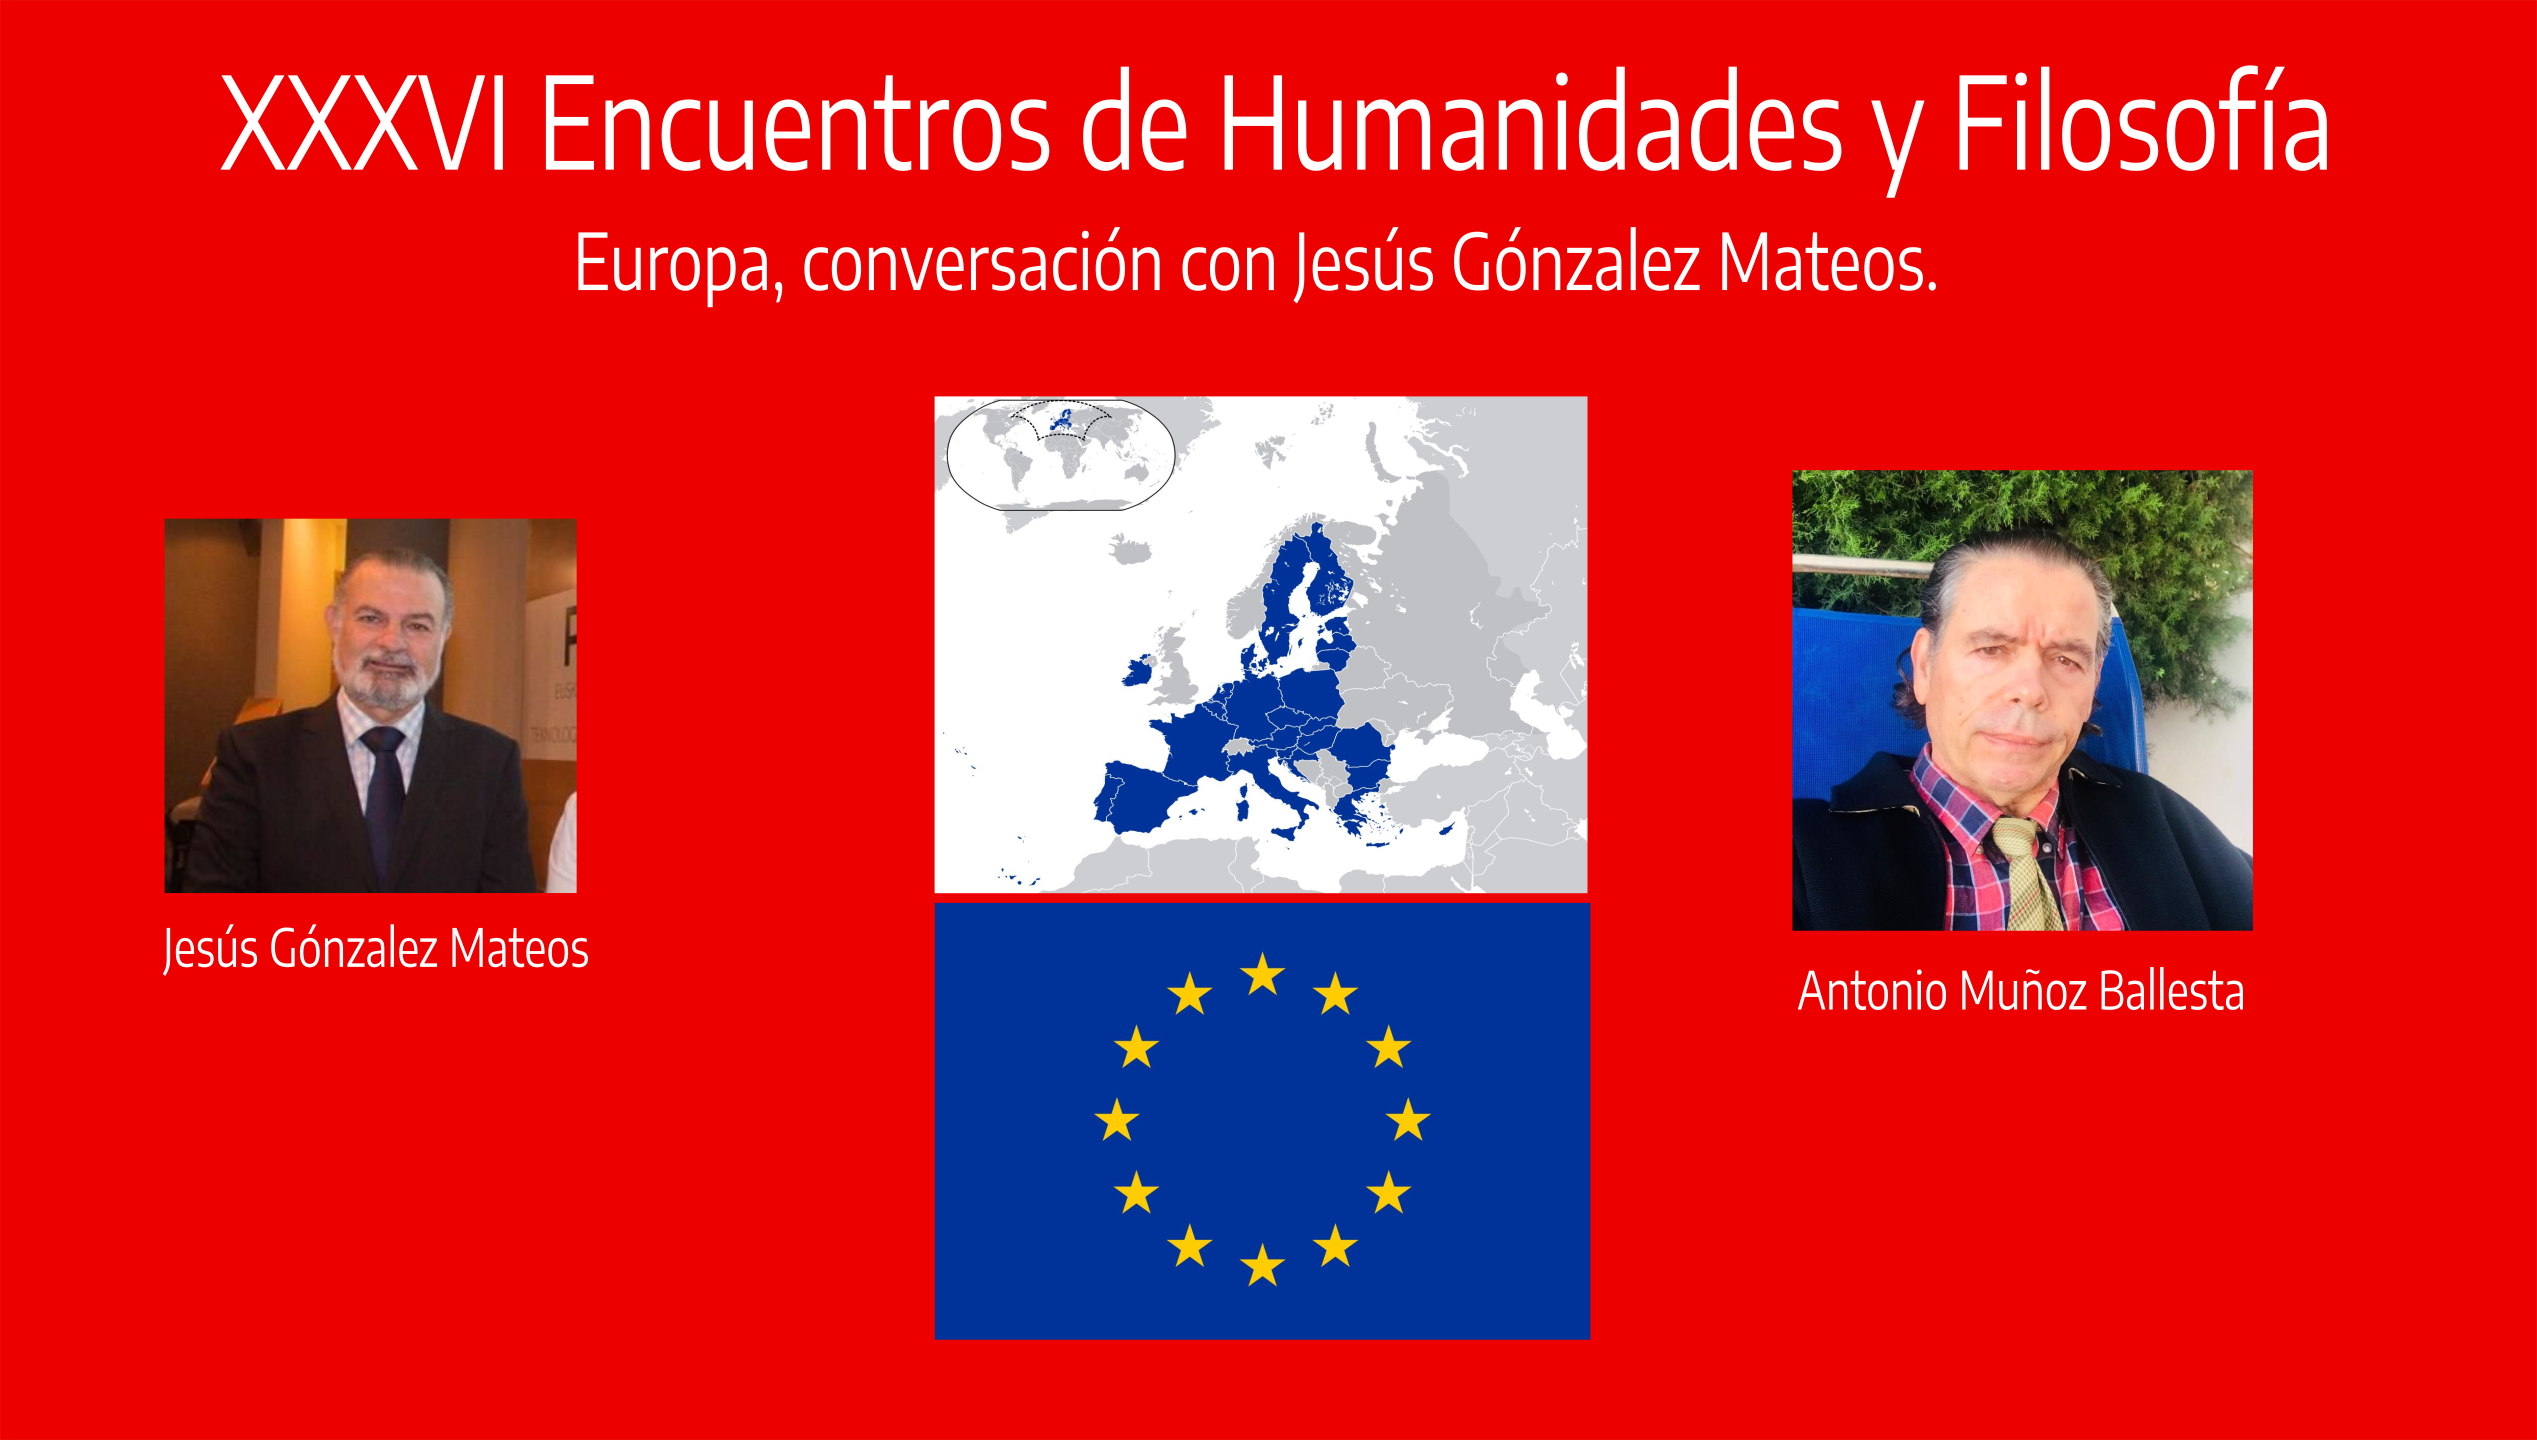 XXXV Encuentros de Humanidades y Filosfofía, Conversación sobre España .